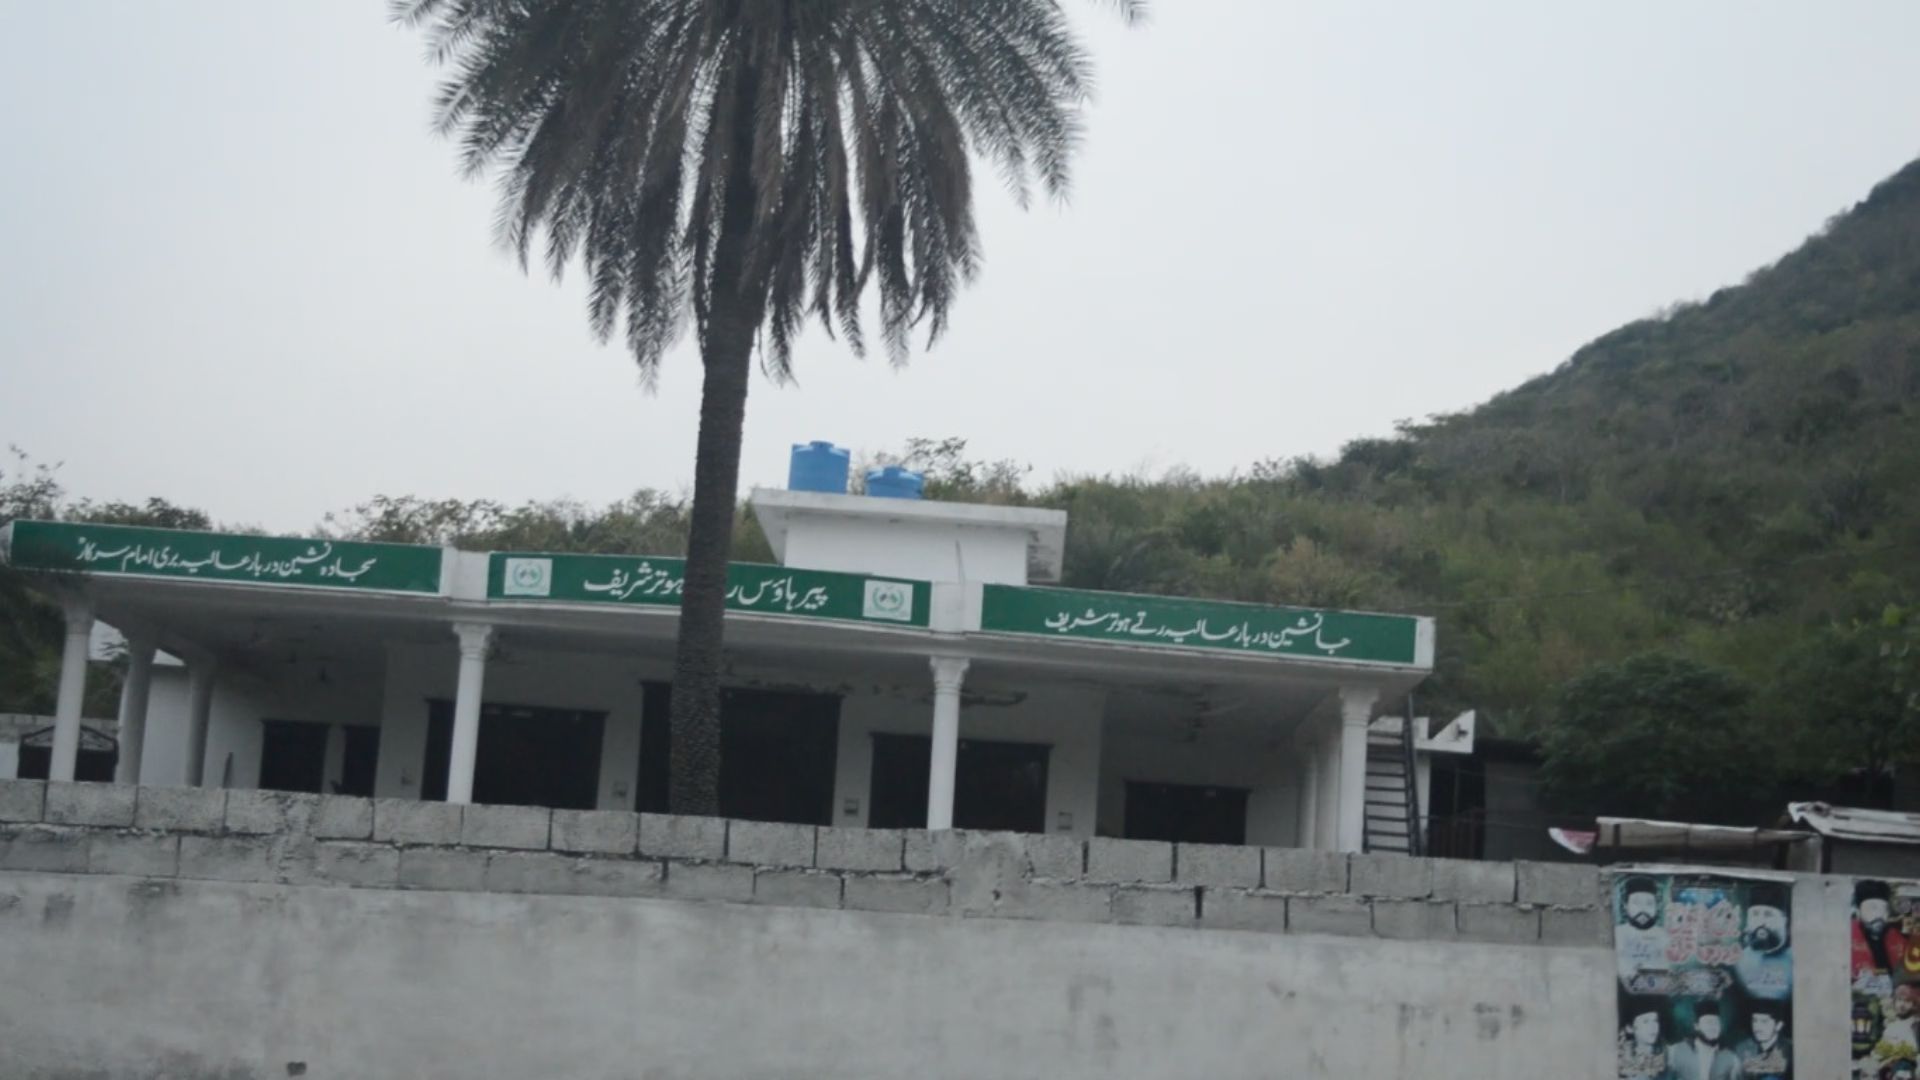 Pir house of Ratta Hotar Shareef